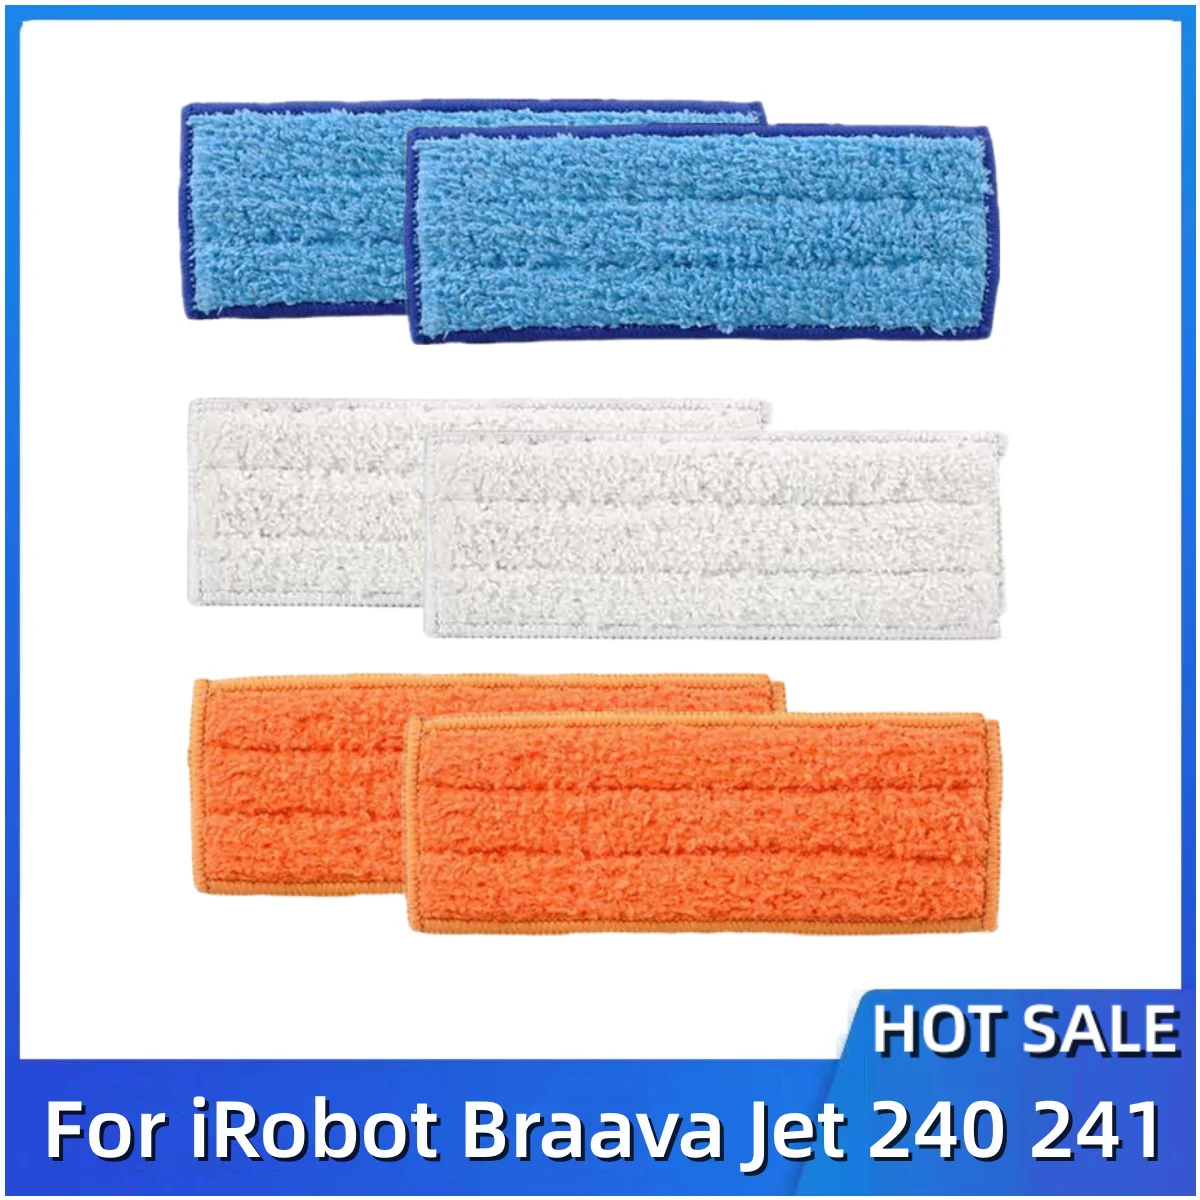 

6pcs/lot Robot Cleaner Brushes Spare Parts 2pcs Wet Pad Mop +2pc Damp Pad Mop + 2pcs Dry Pad Mop for iRobot Braava Jet 240 241